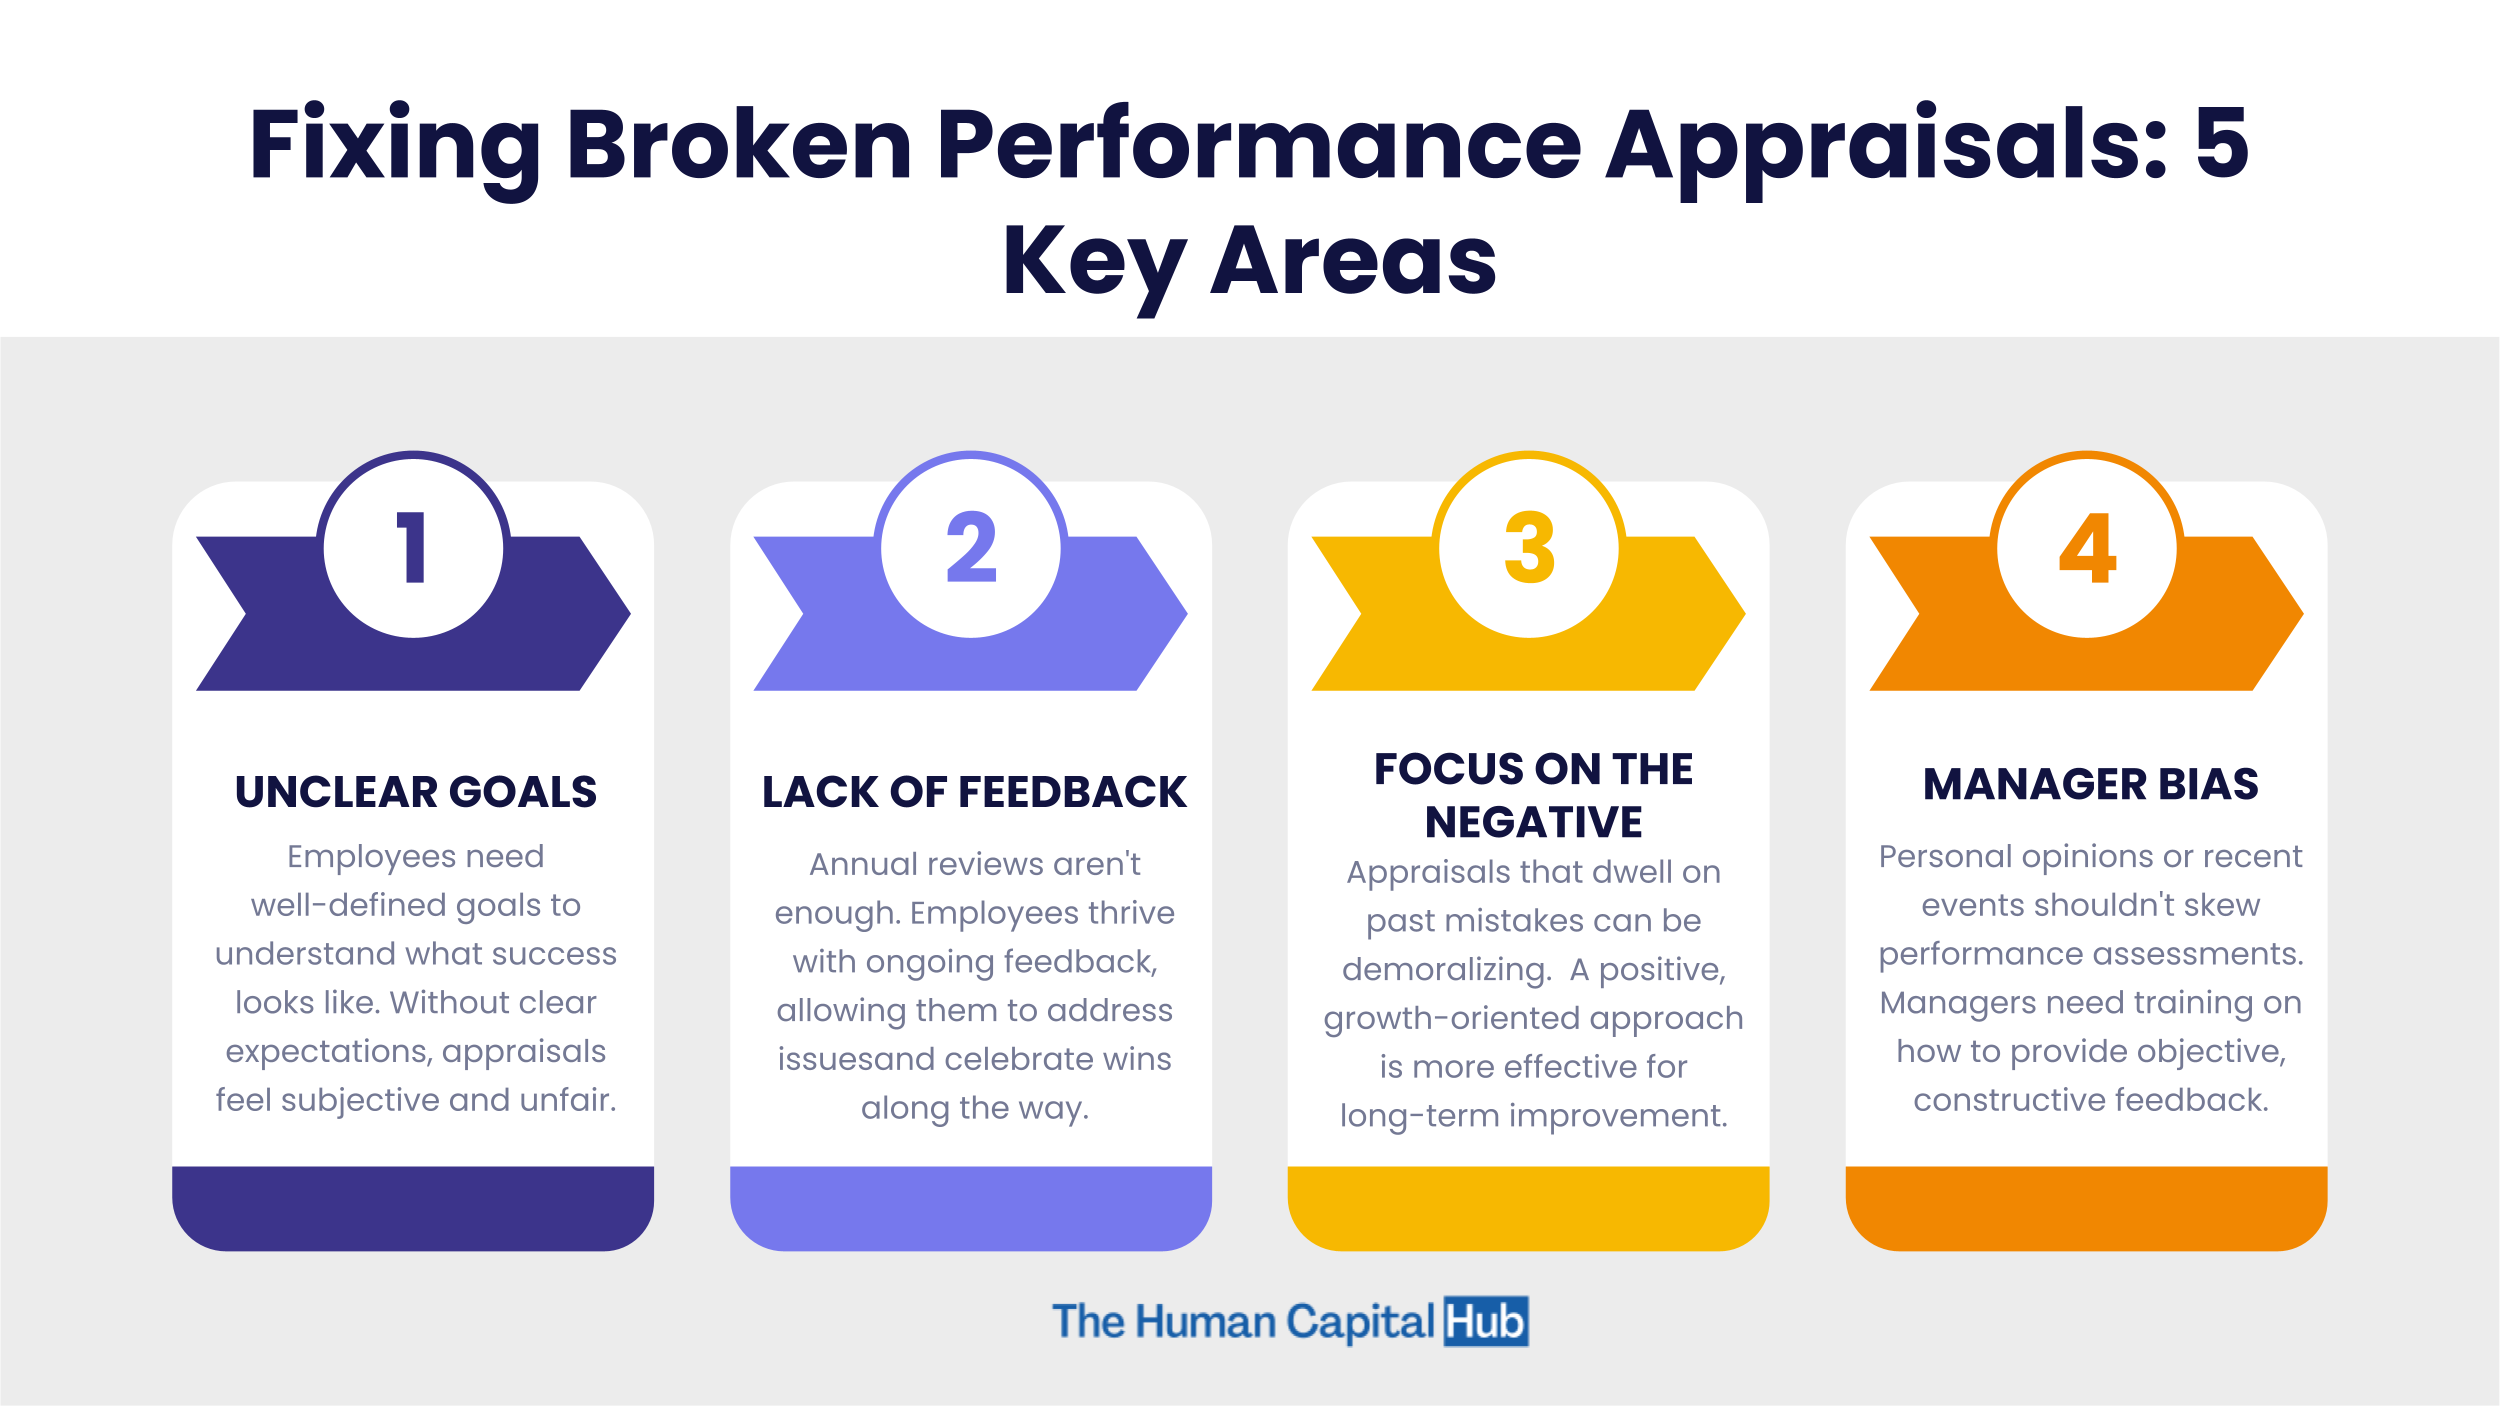 13 Reasons Why Performance Appraisals Fail